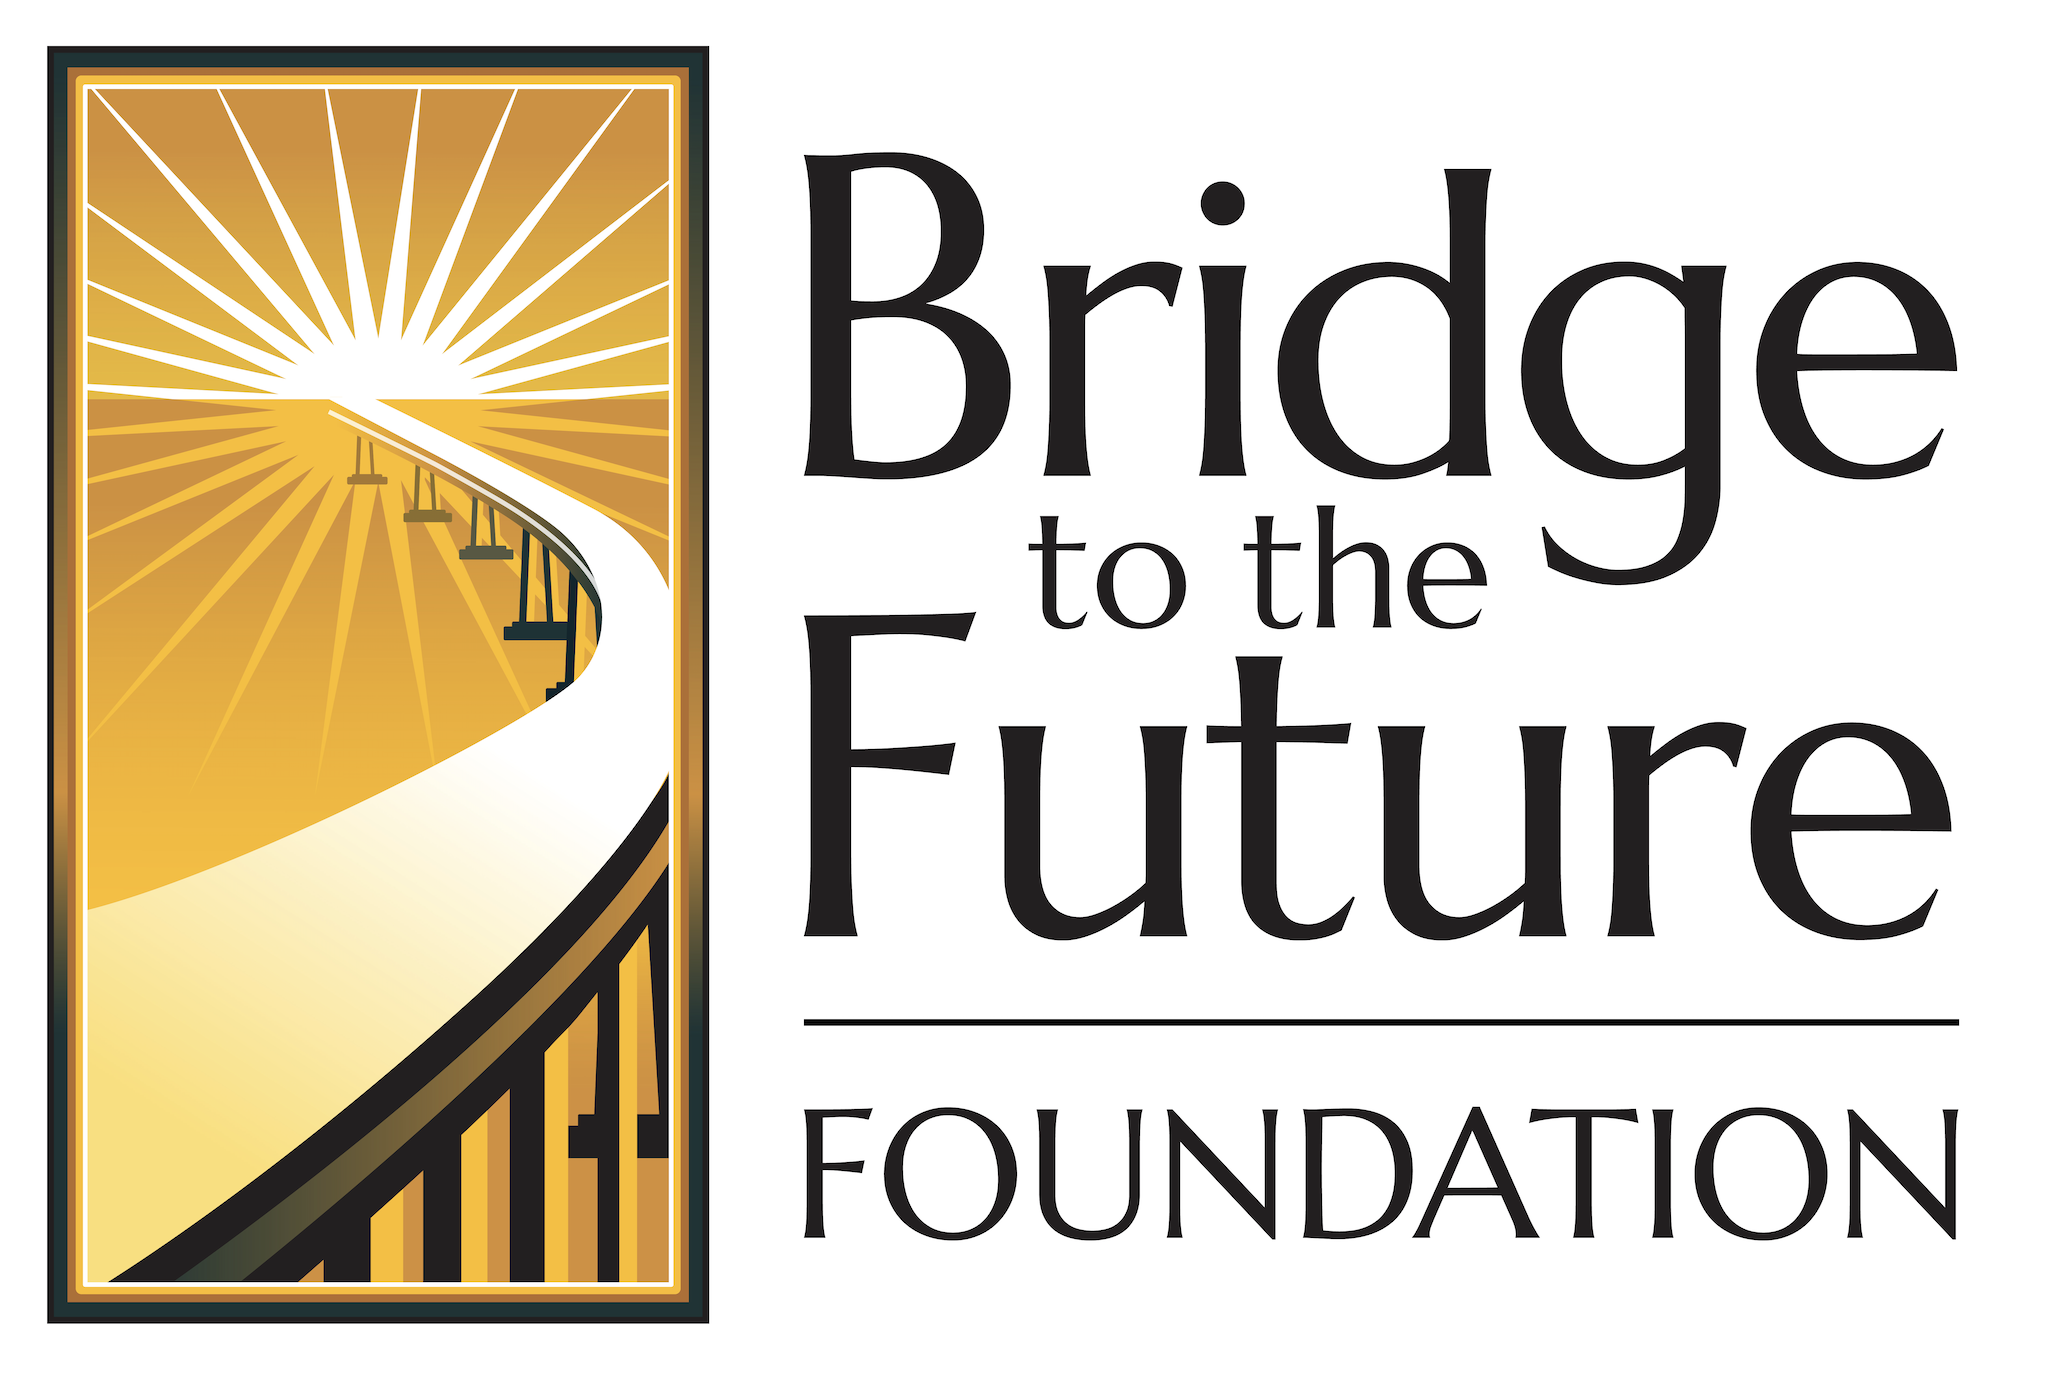 Bridge to the Future Foundation logo